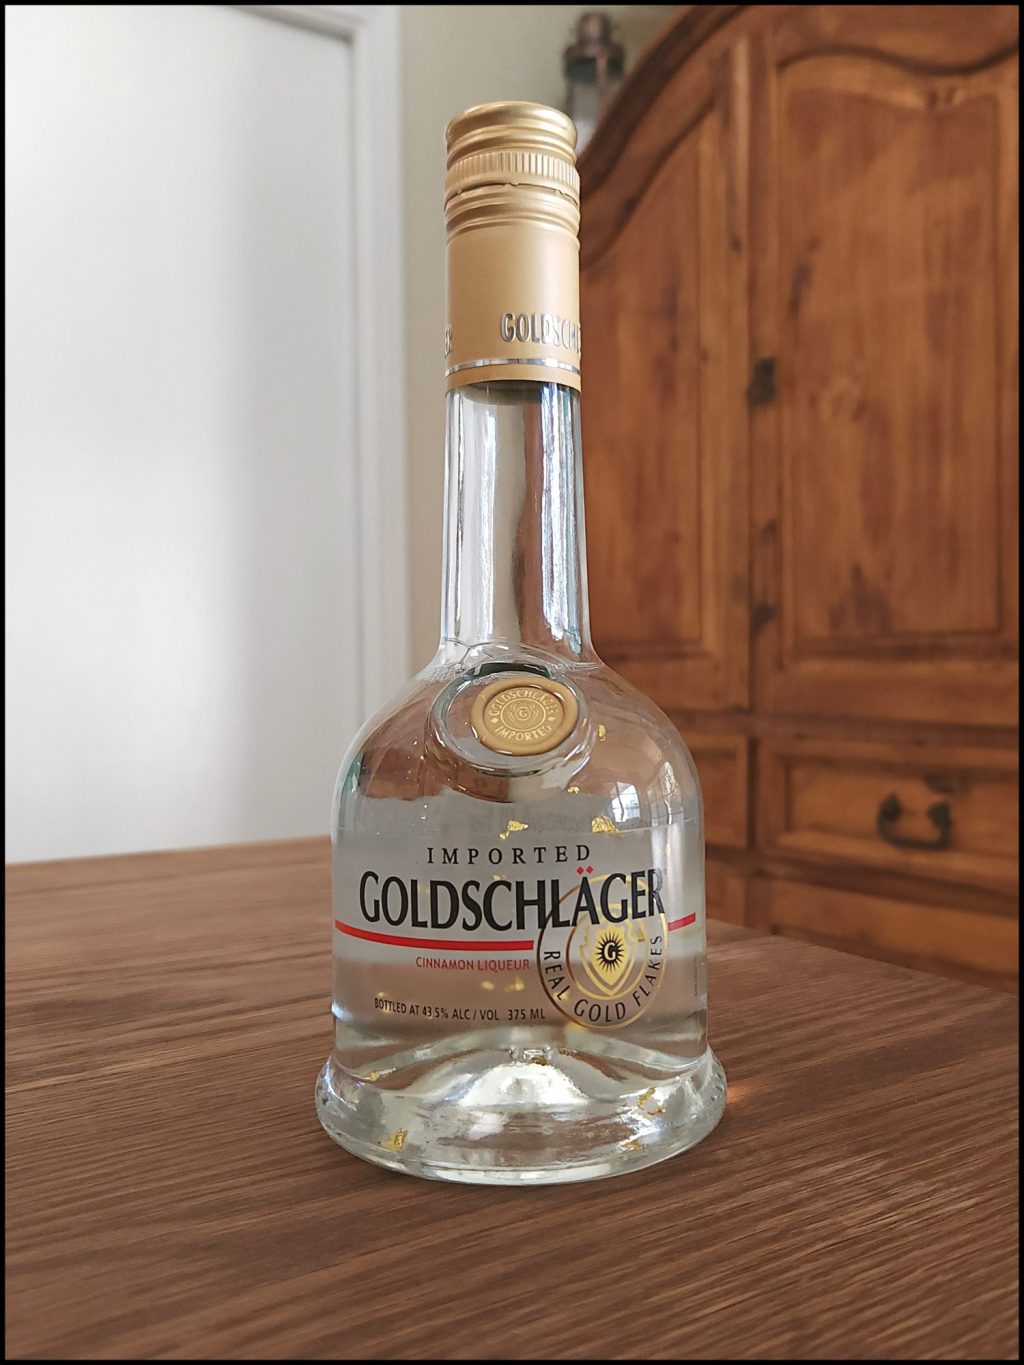 Bottle of Goldschläger Cinnamon Schnapps sitting on a wooden table